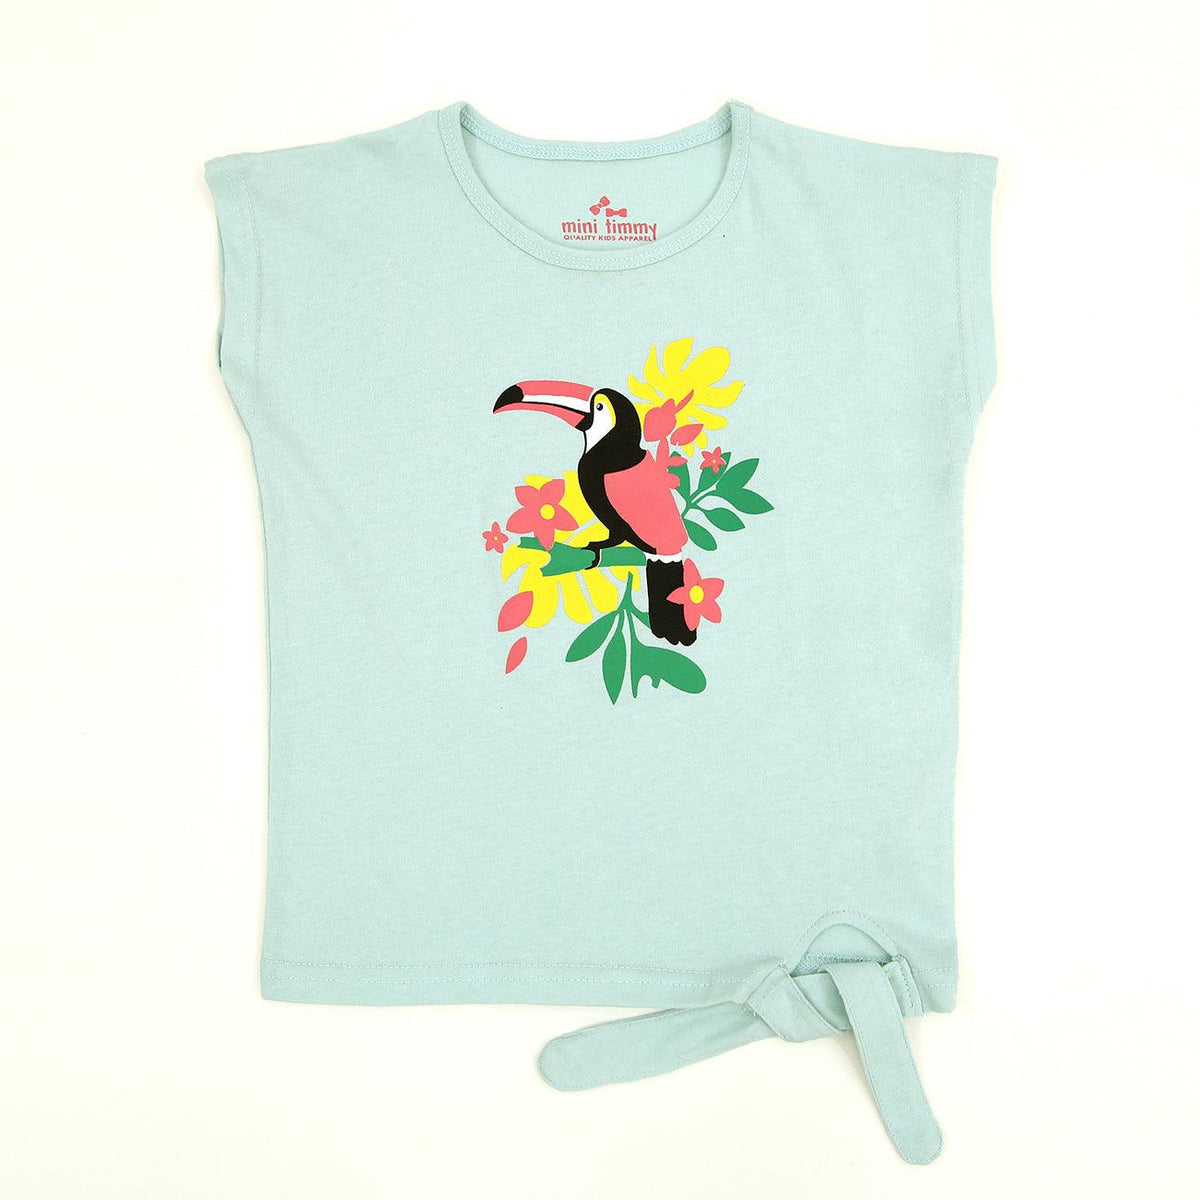 Girls Fashion Color-Full Printed Soft Cotton T-Shirt 9-12 MONTH - 9-10 YRS (MI-11683) - Brands River